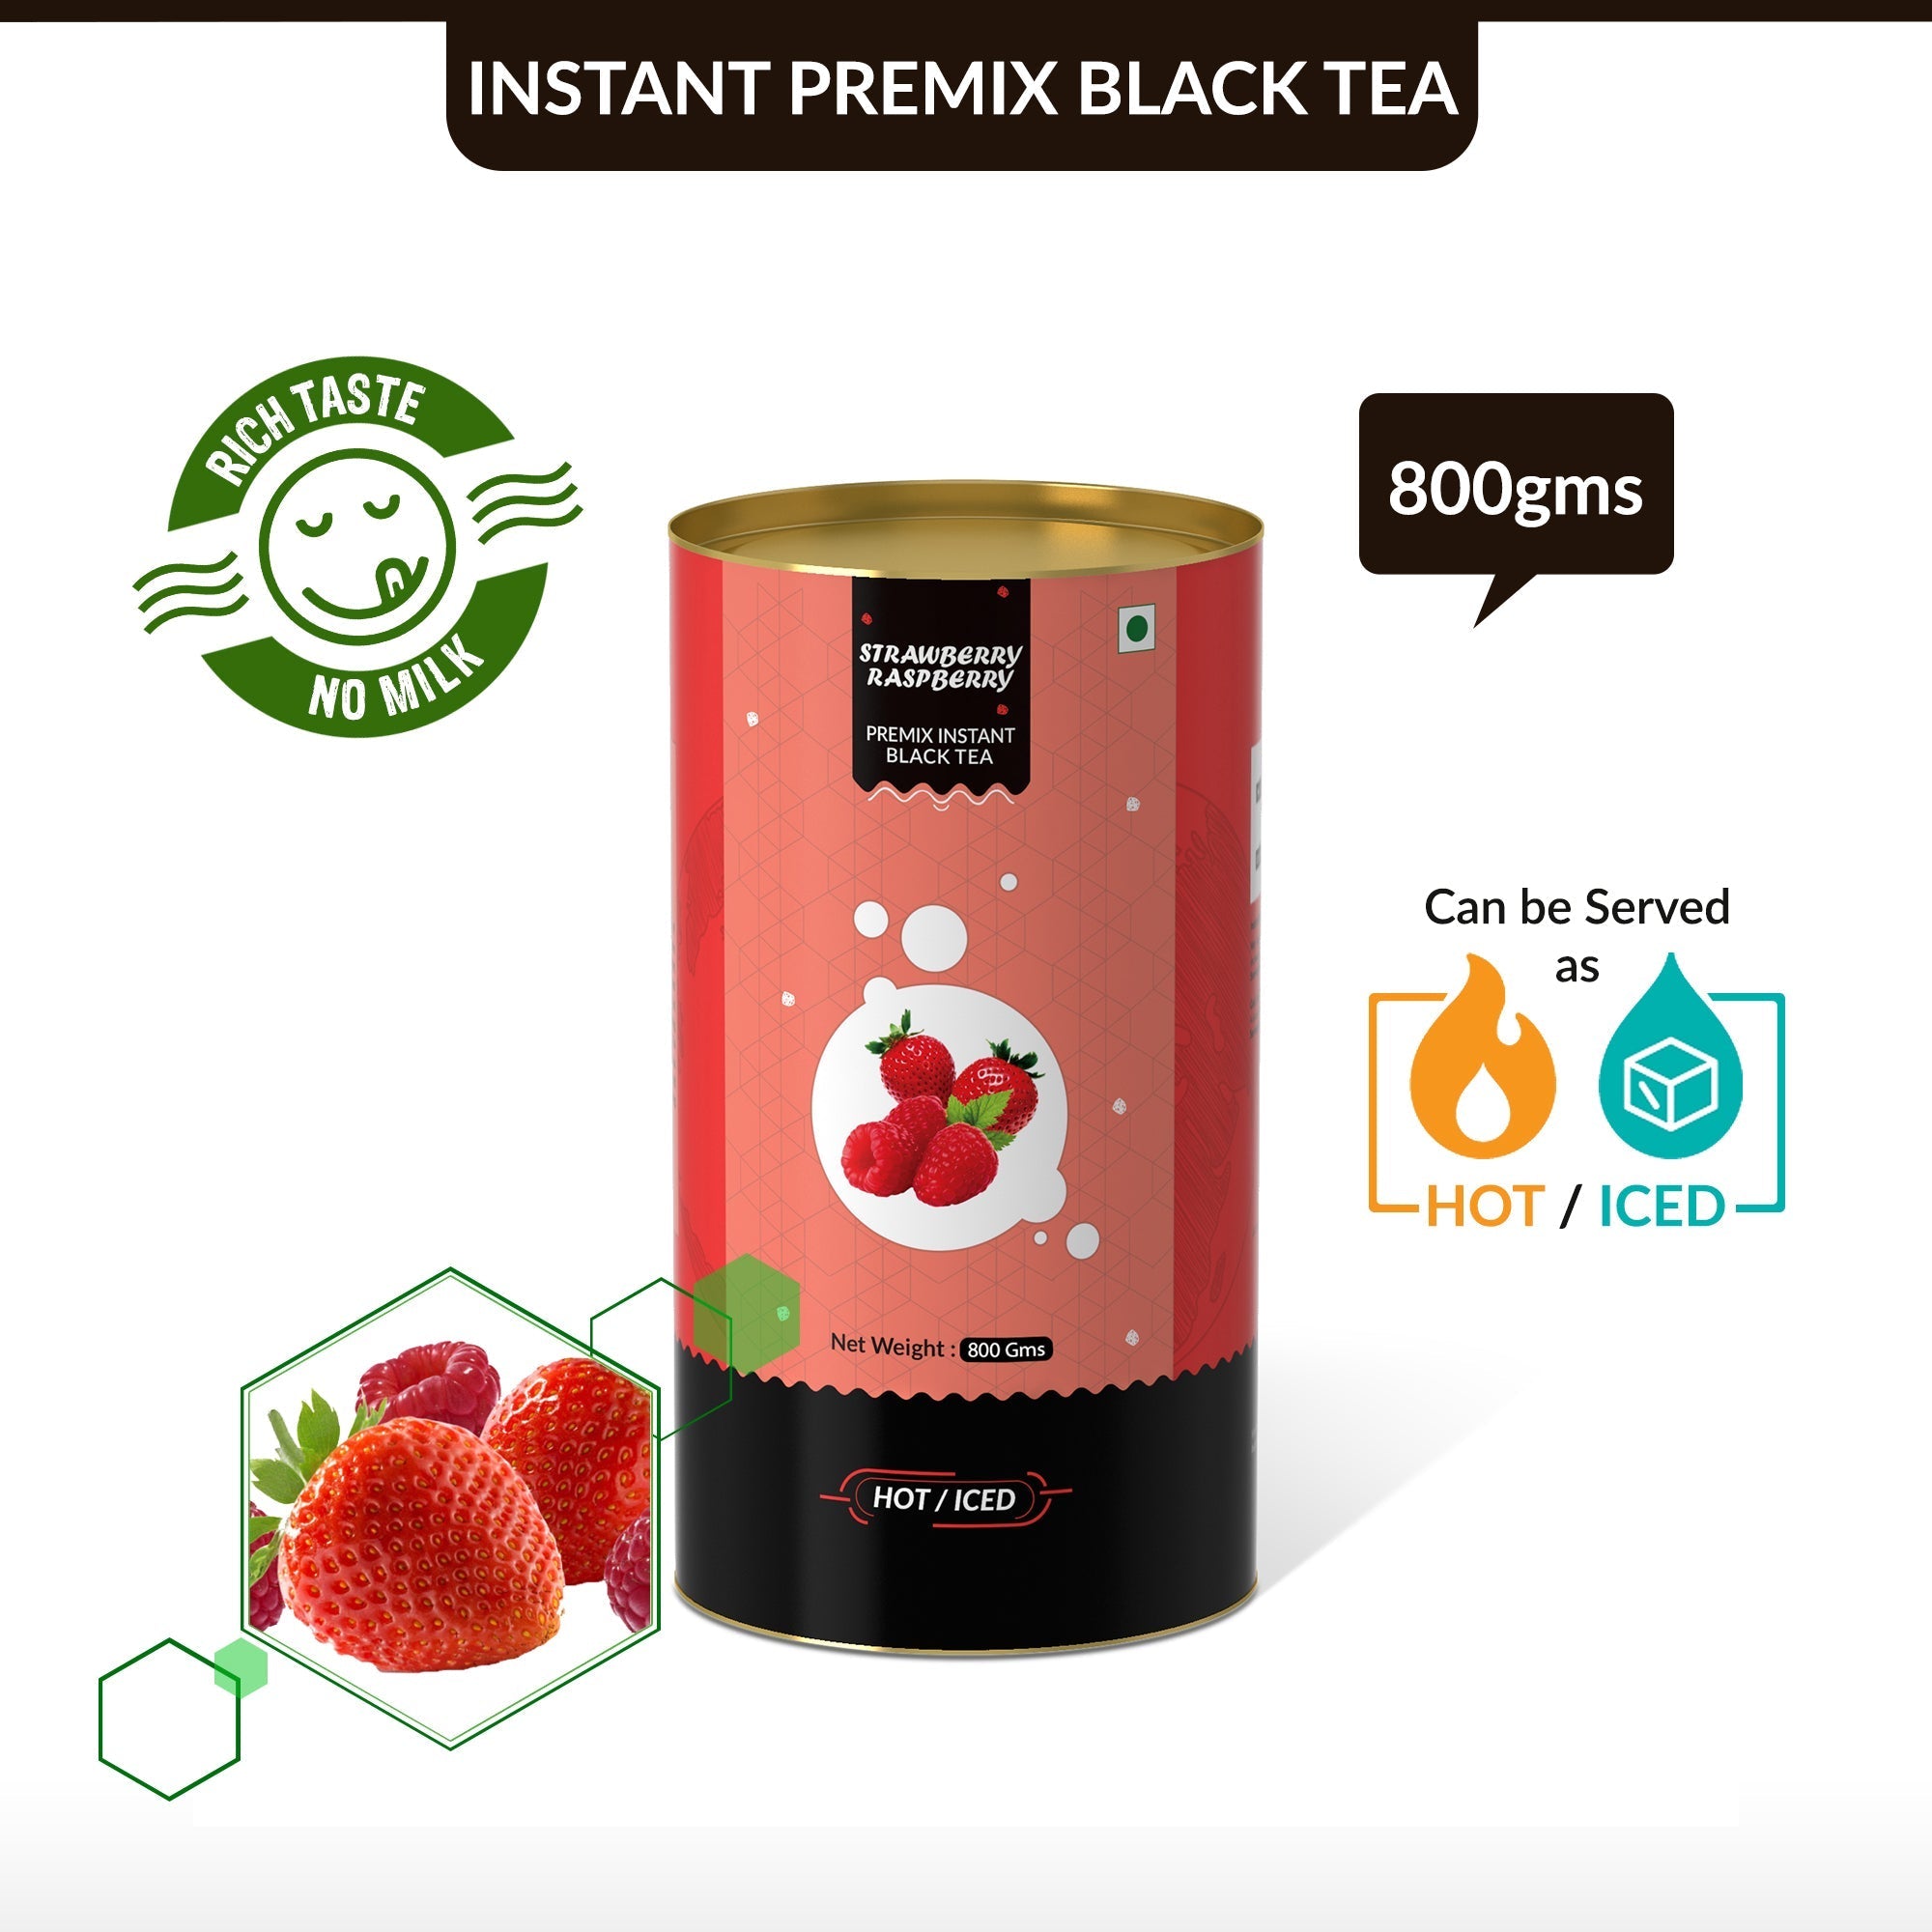 Strawberry & Rasberry Flavored Instant Black Tea - 800 gms